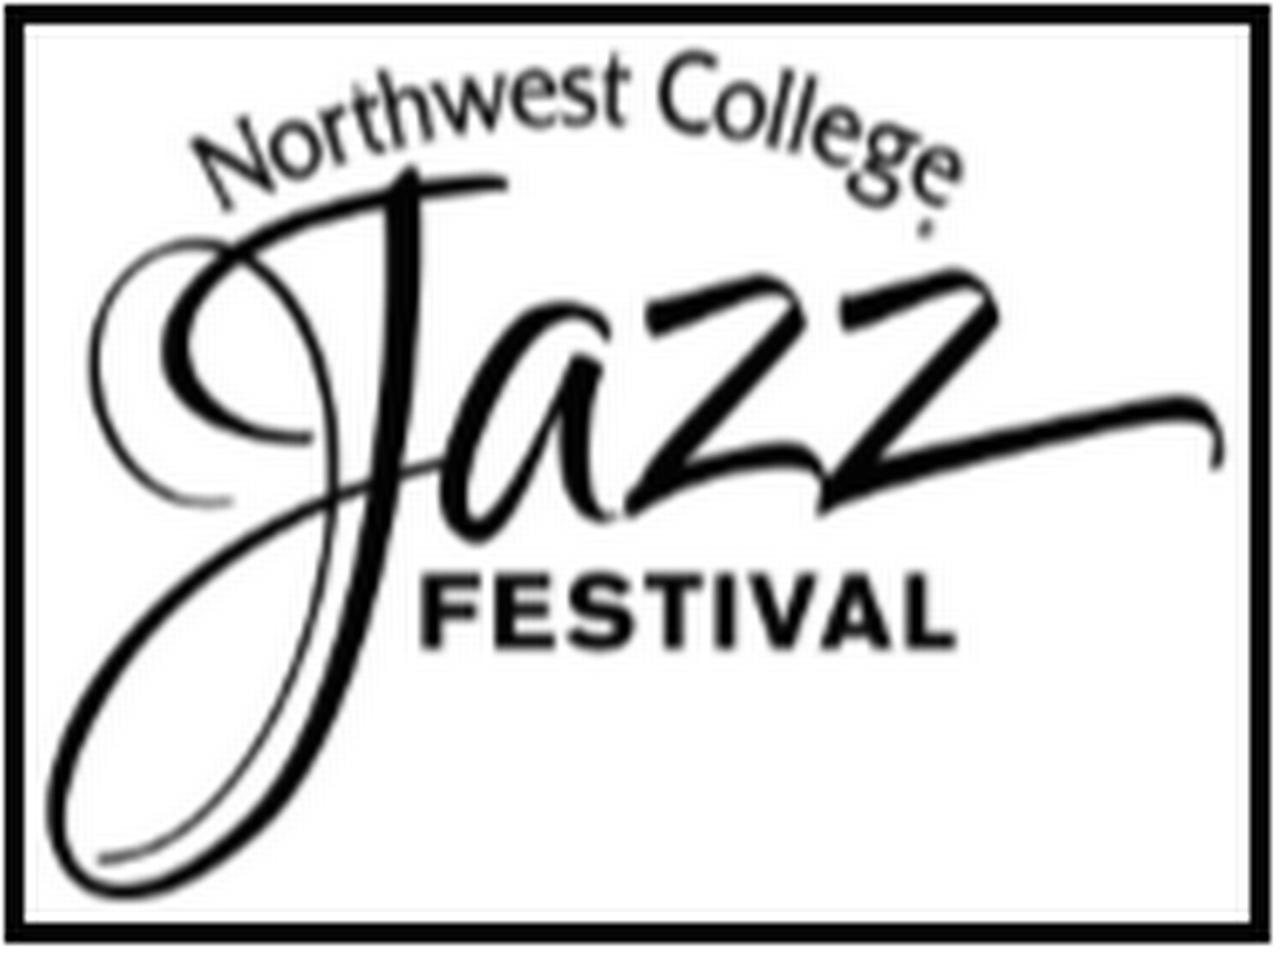 39th Annual Northwest College Jazz Festival image